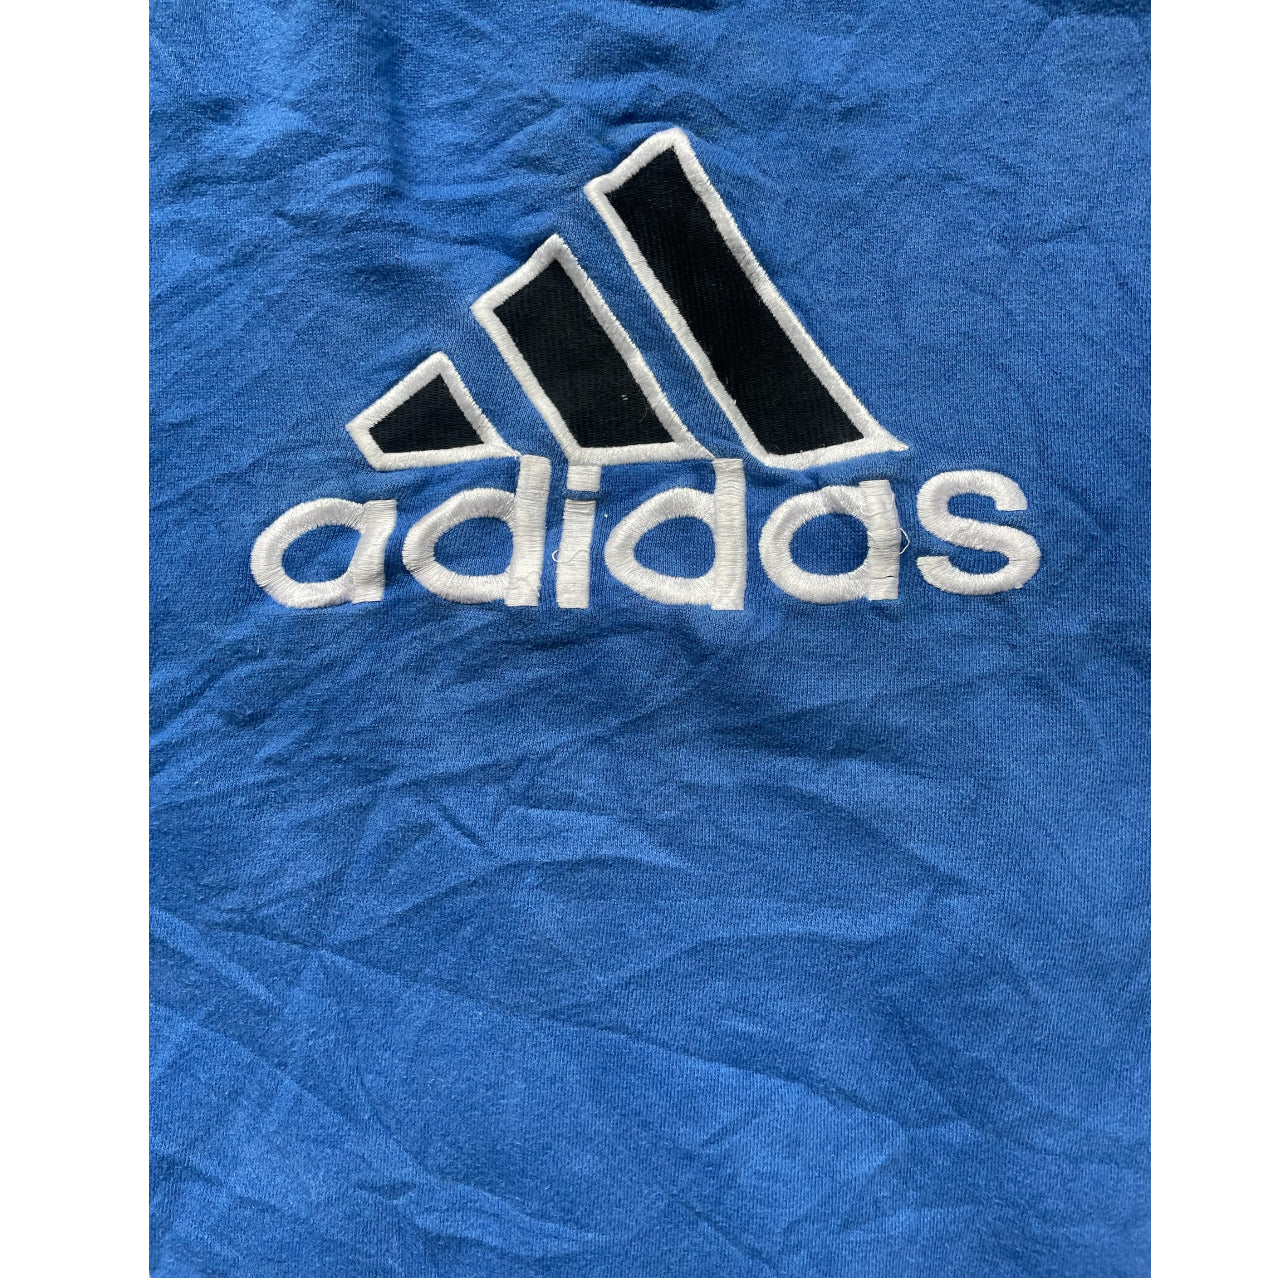 Adidas Vintage Sweatshirt Retro XS Size Blue A_38